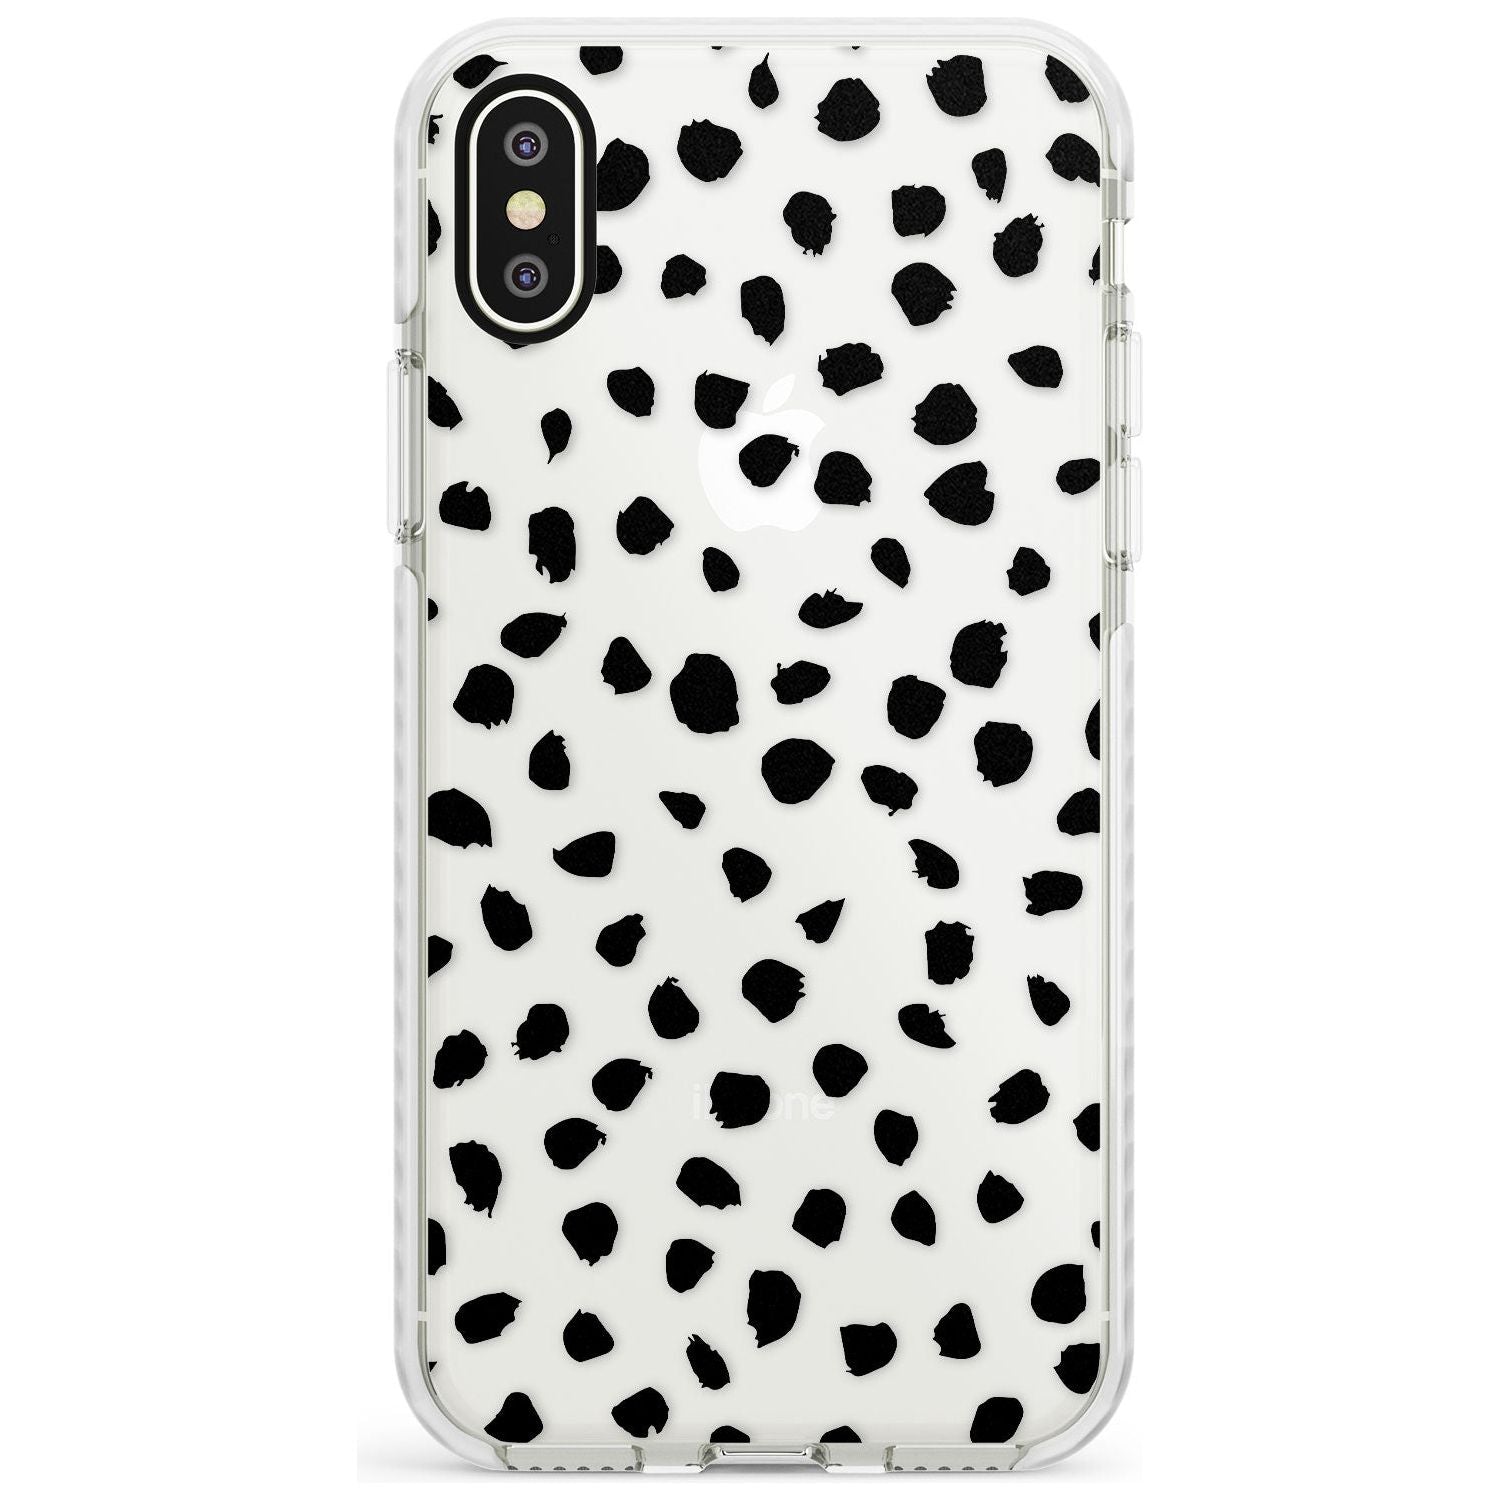 Black on Transparent Dalmatian Polka Dot Spots Impact Phone Case for iPhone X XS Max XR